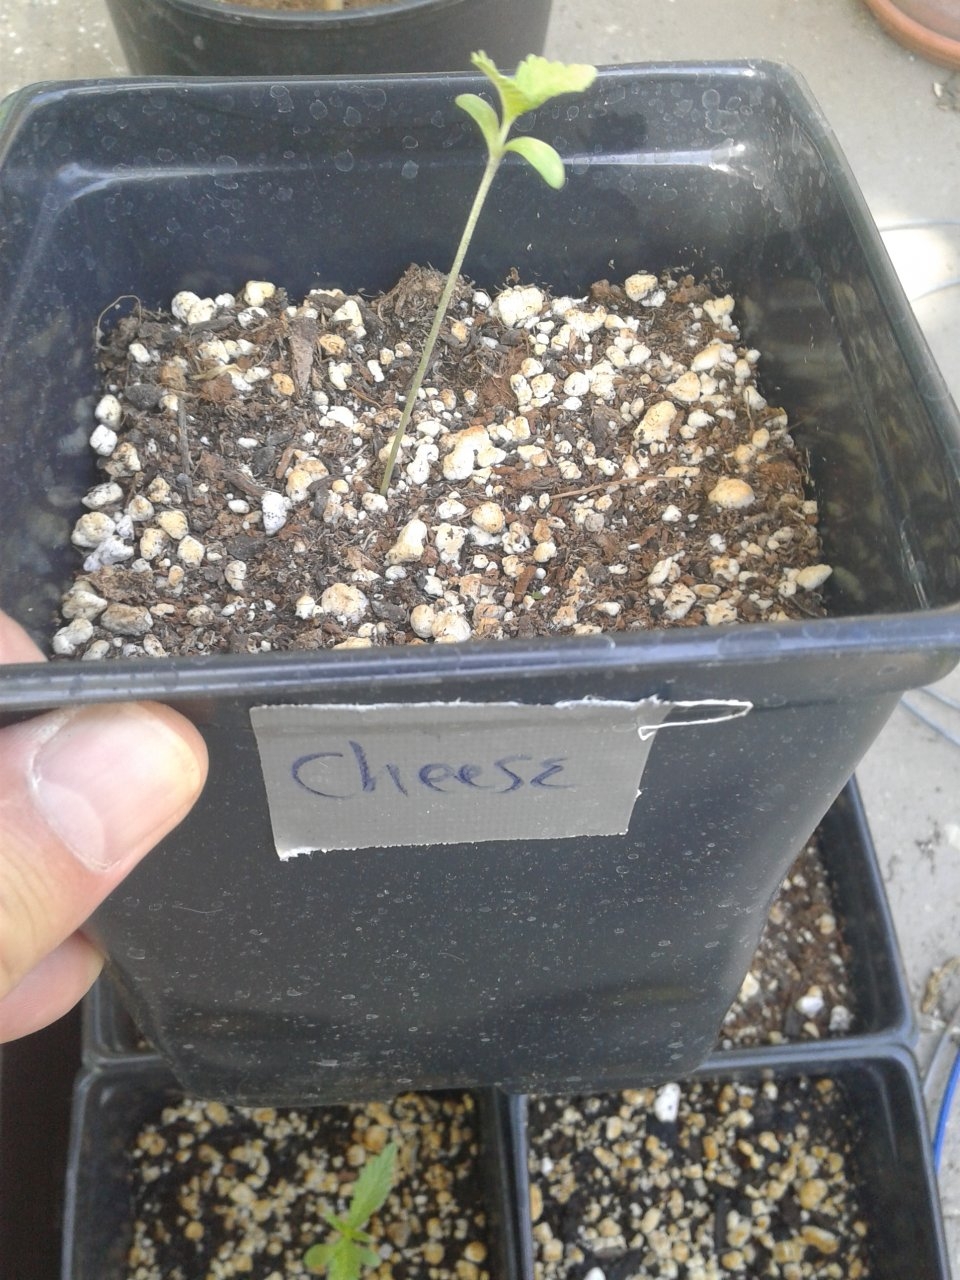 Cheese seedling